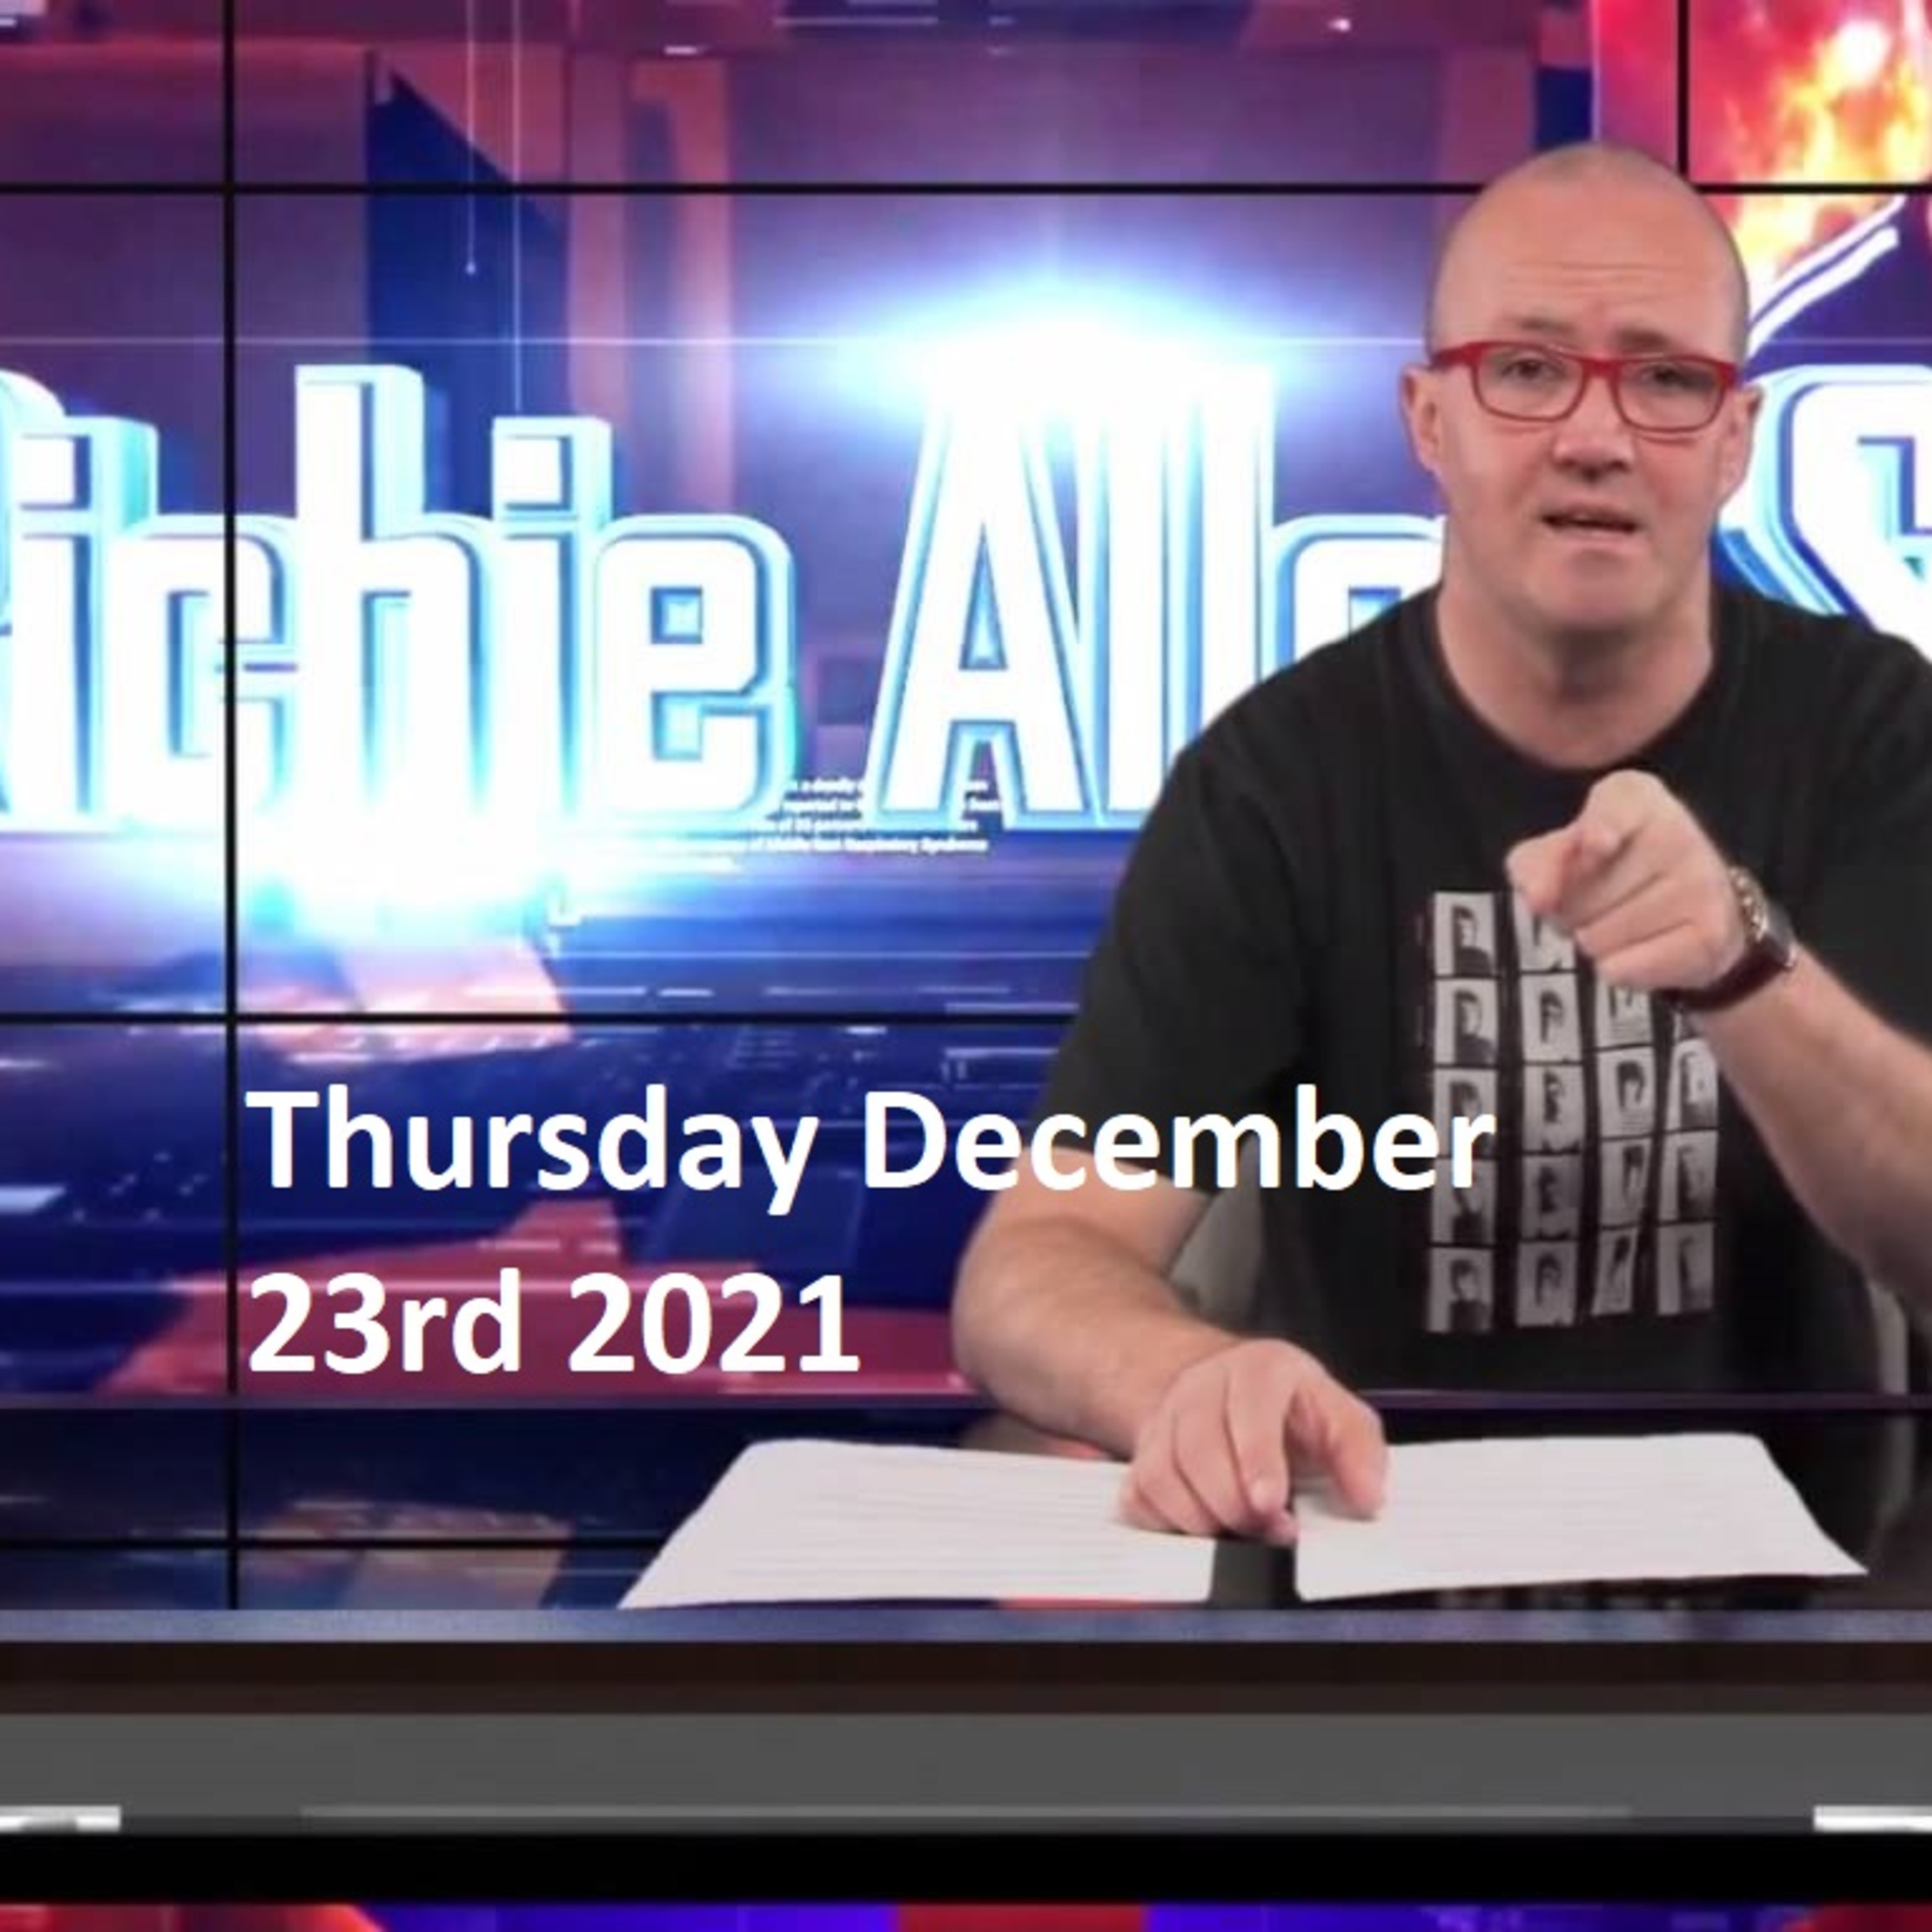 Episode 1385: The Richie Allen Show Thursday December 23rd 2021